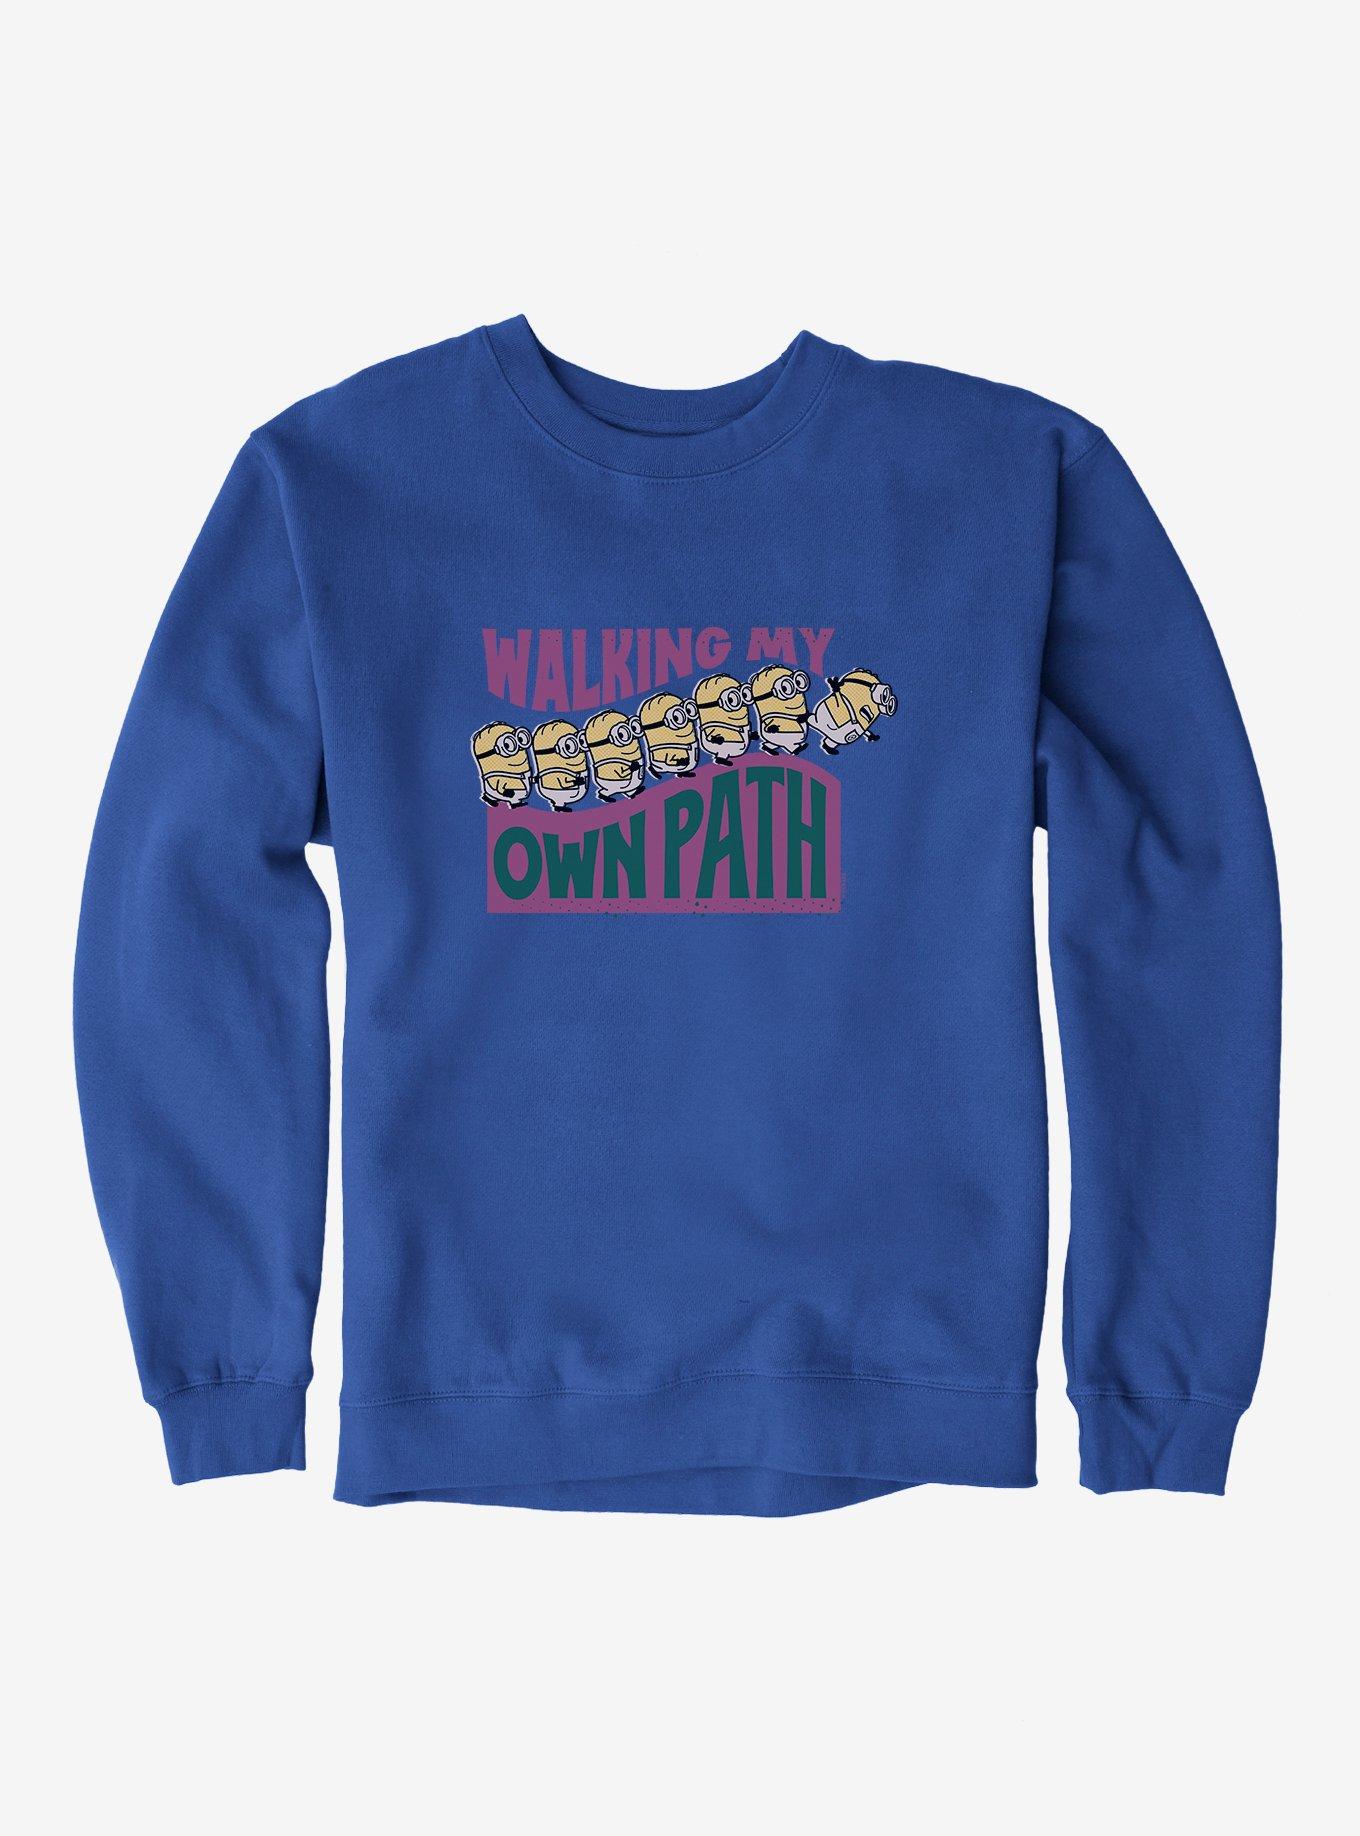 Minions On My Own Path Sweatshirt, ROYAL BLUE, hi-res